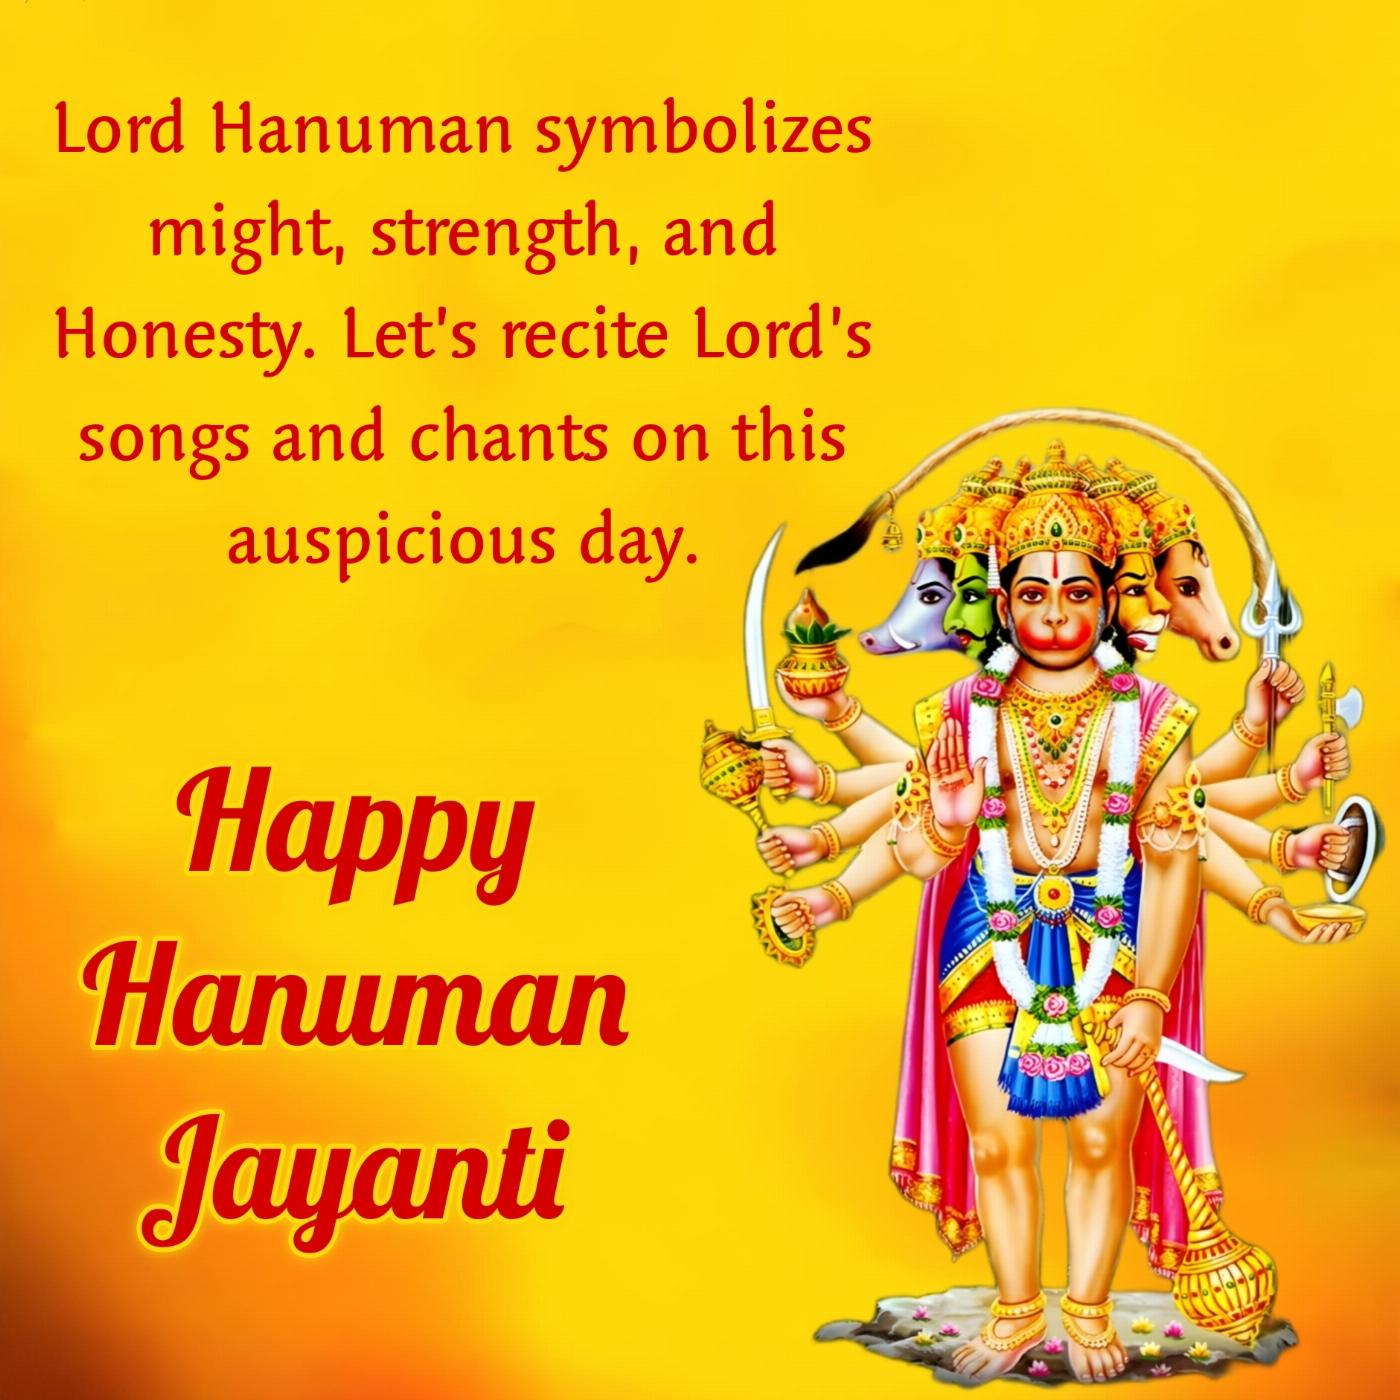 Lord Hanuman symbolizes might strength and Honesty